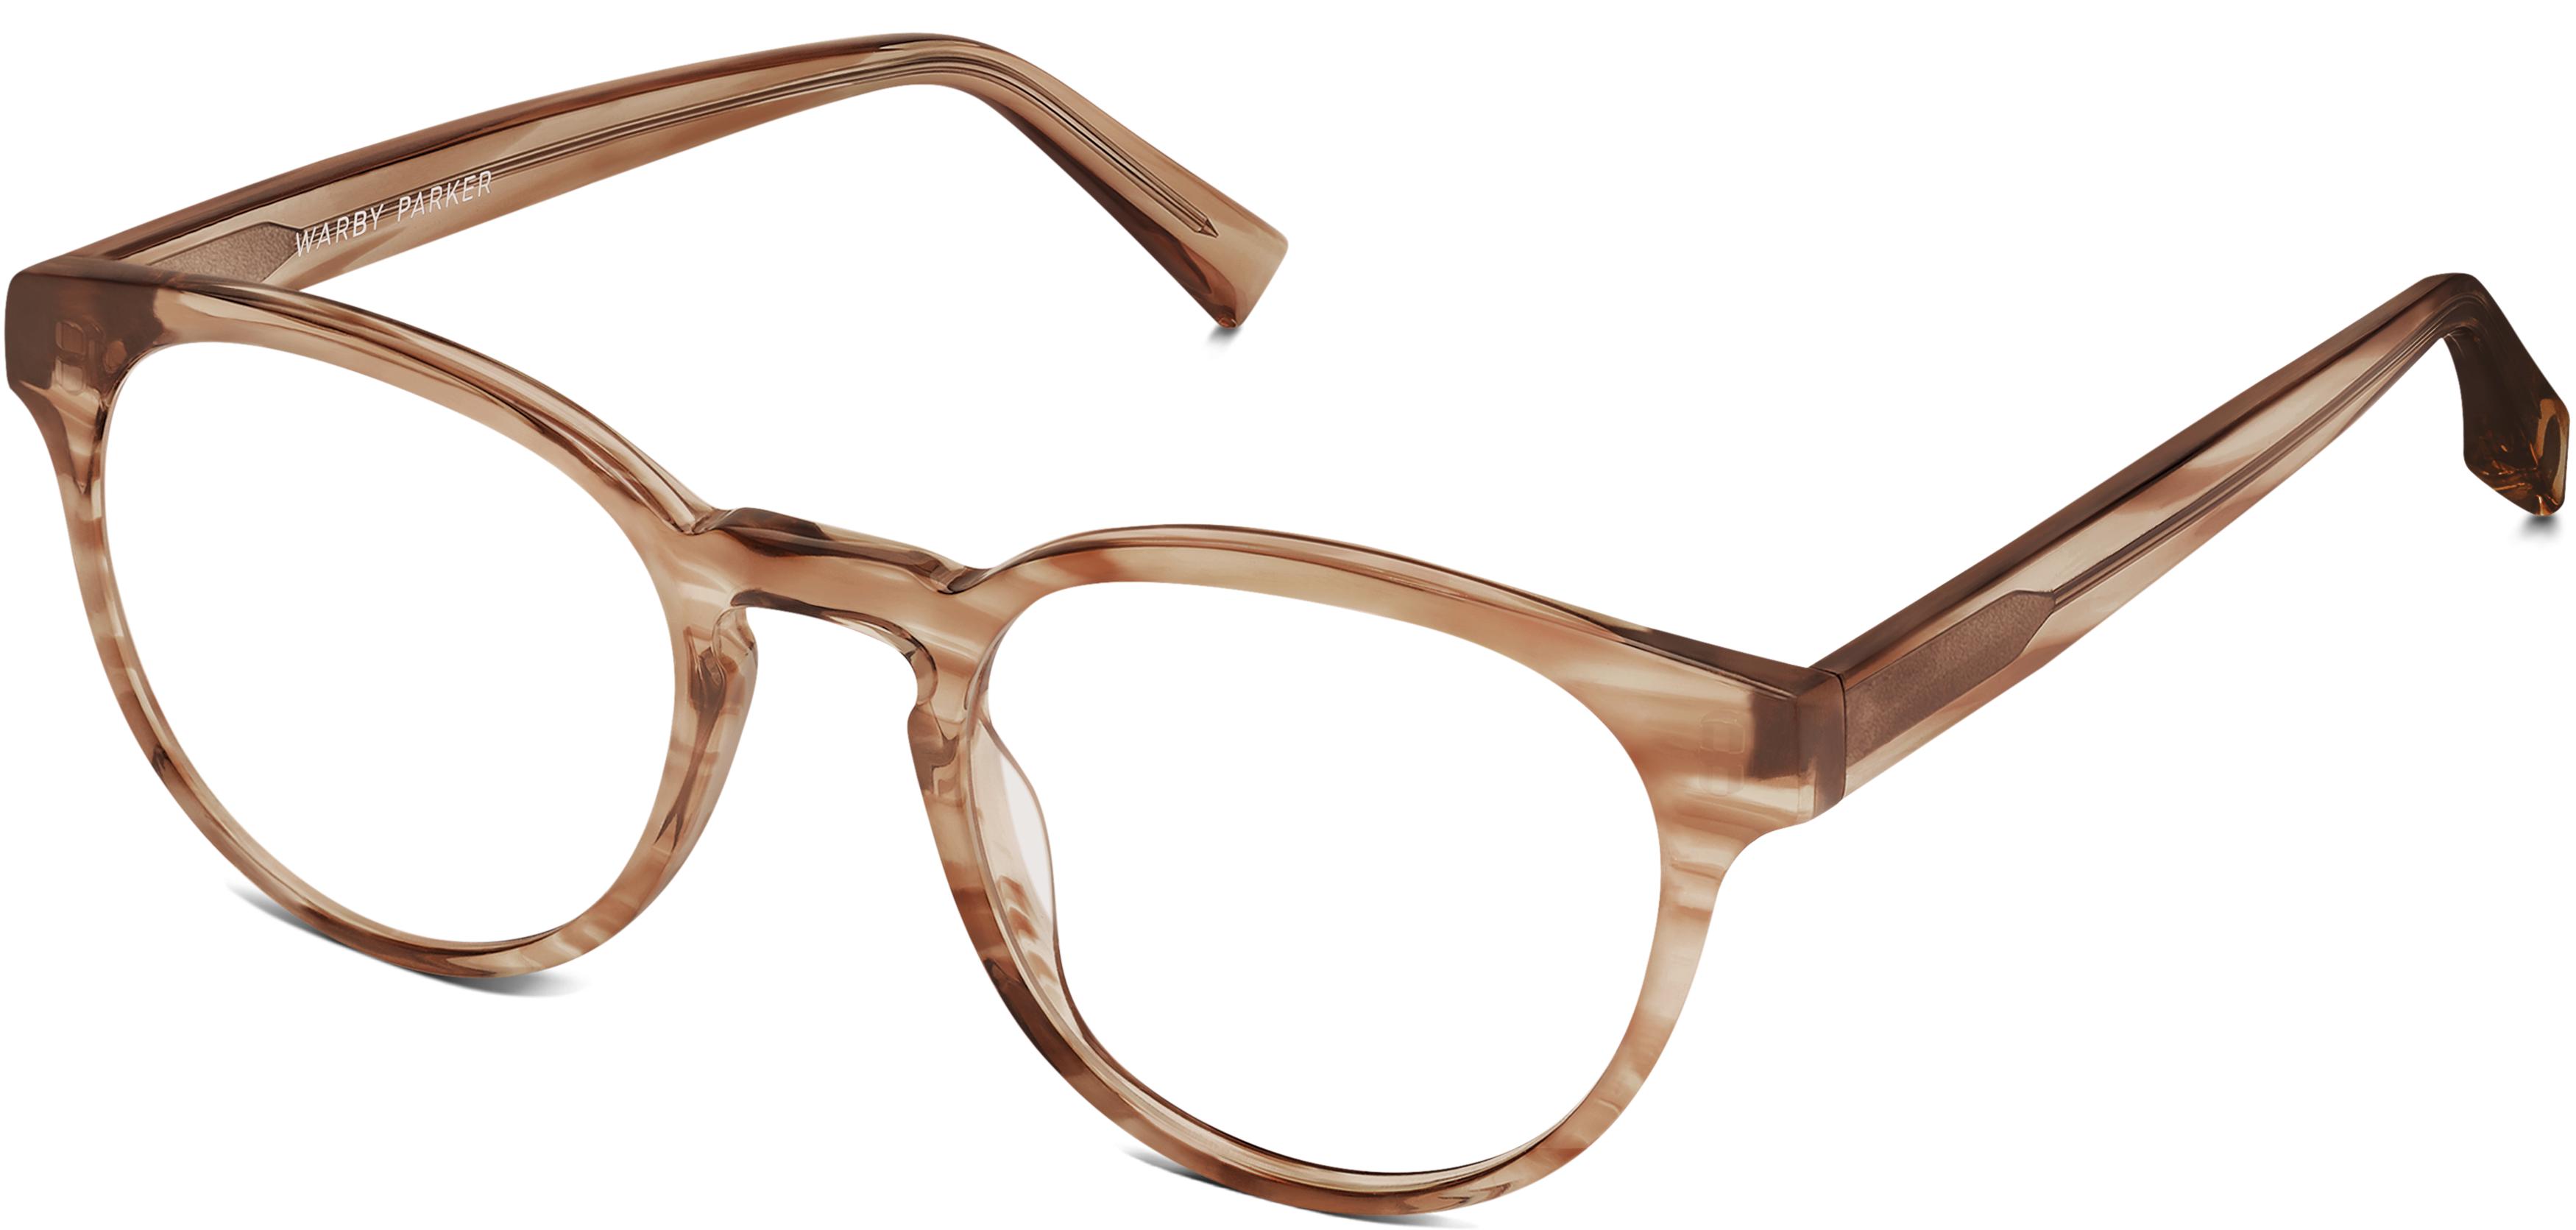 Durand Eyeglasses in Crystal with Oak Barrel | Warby Parker